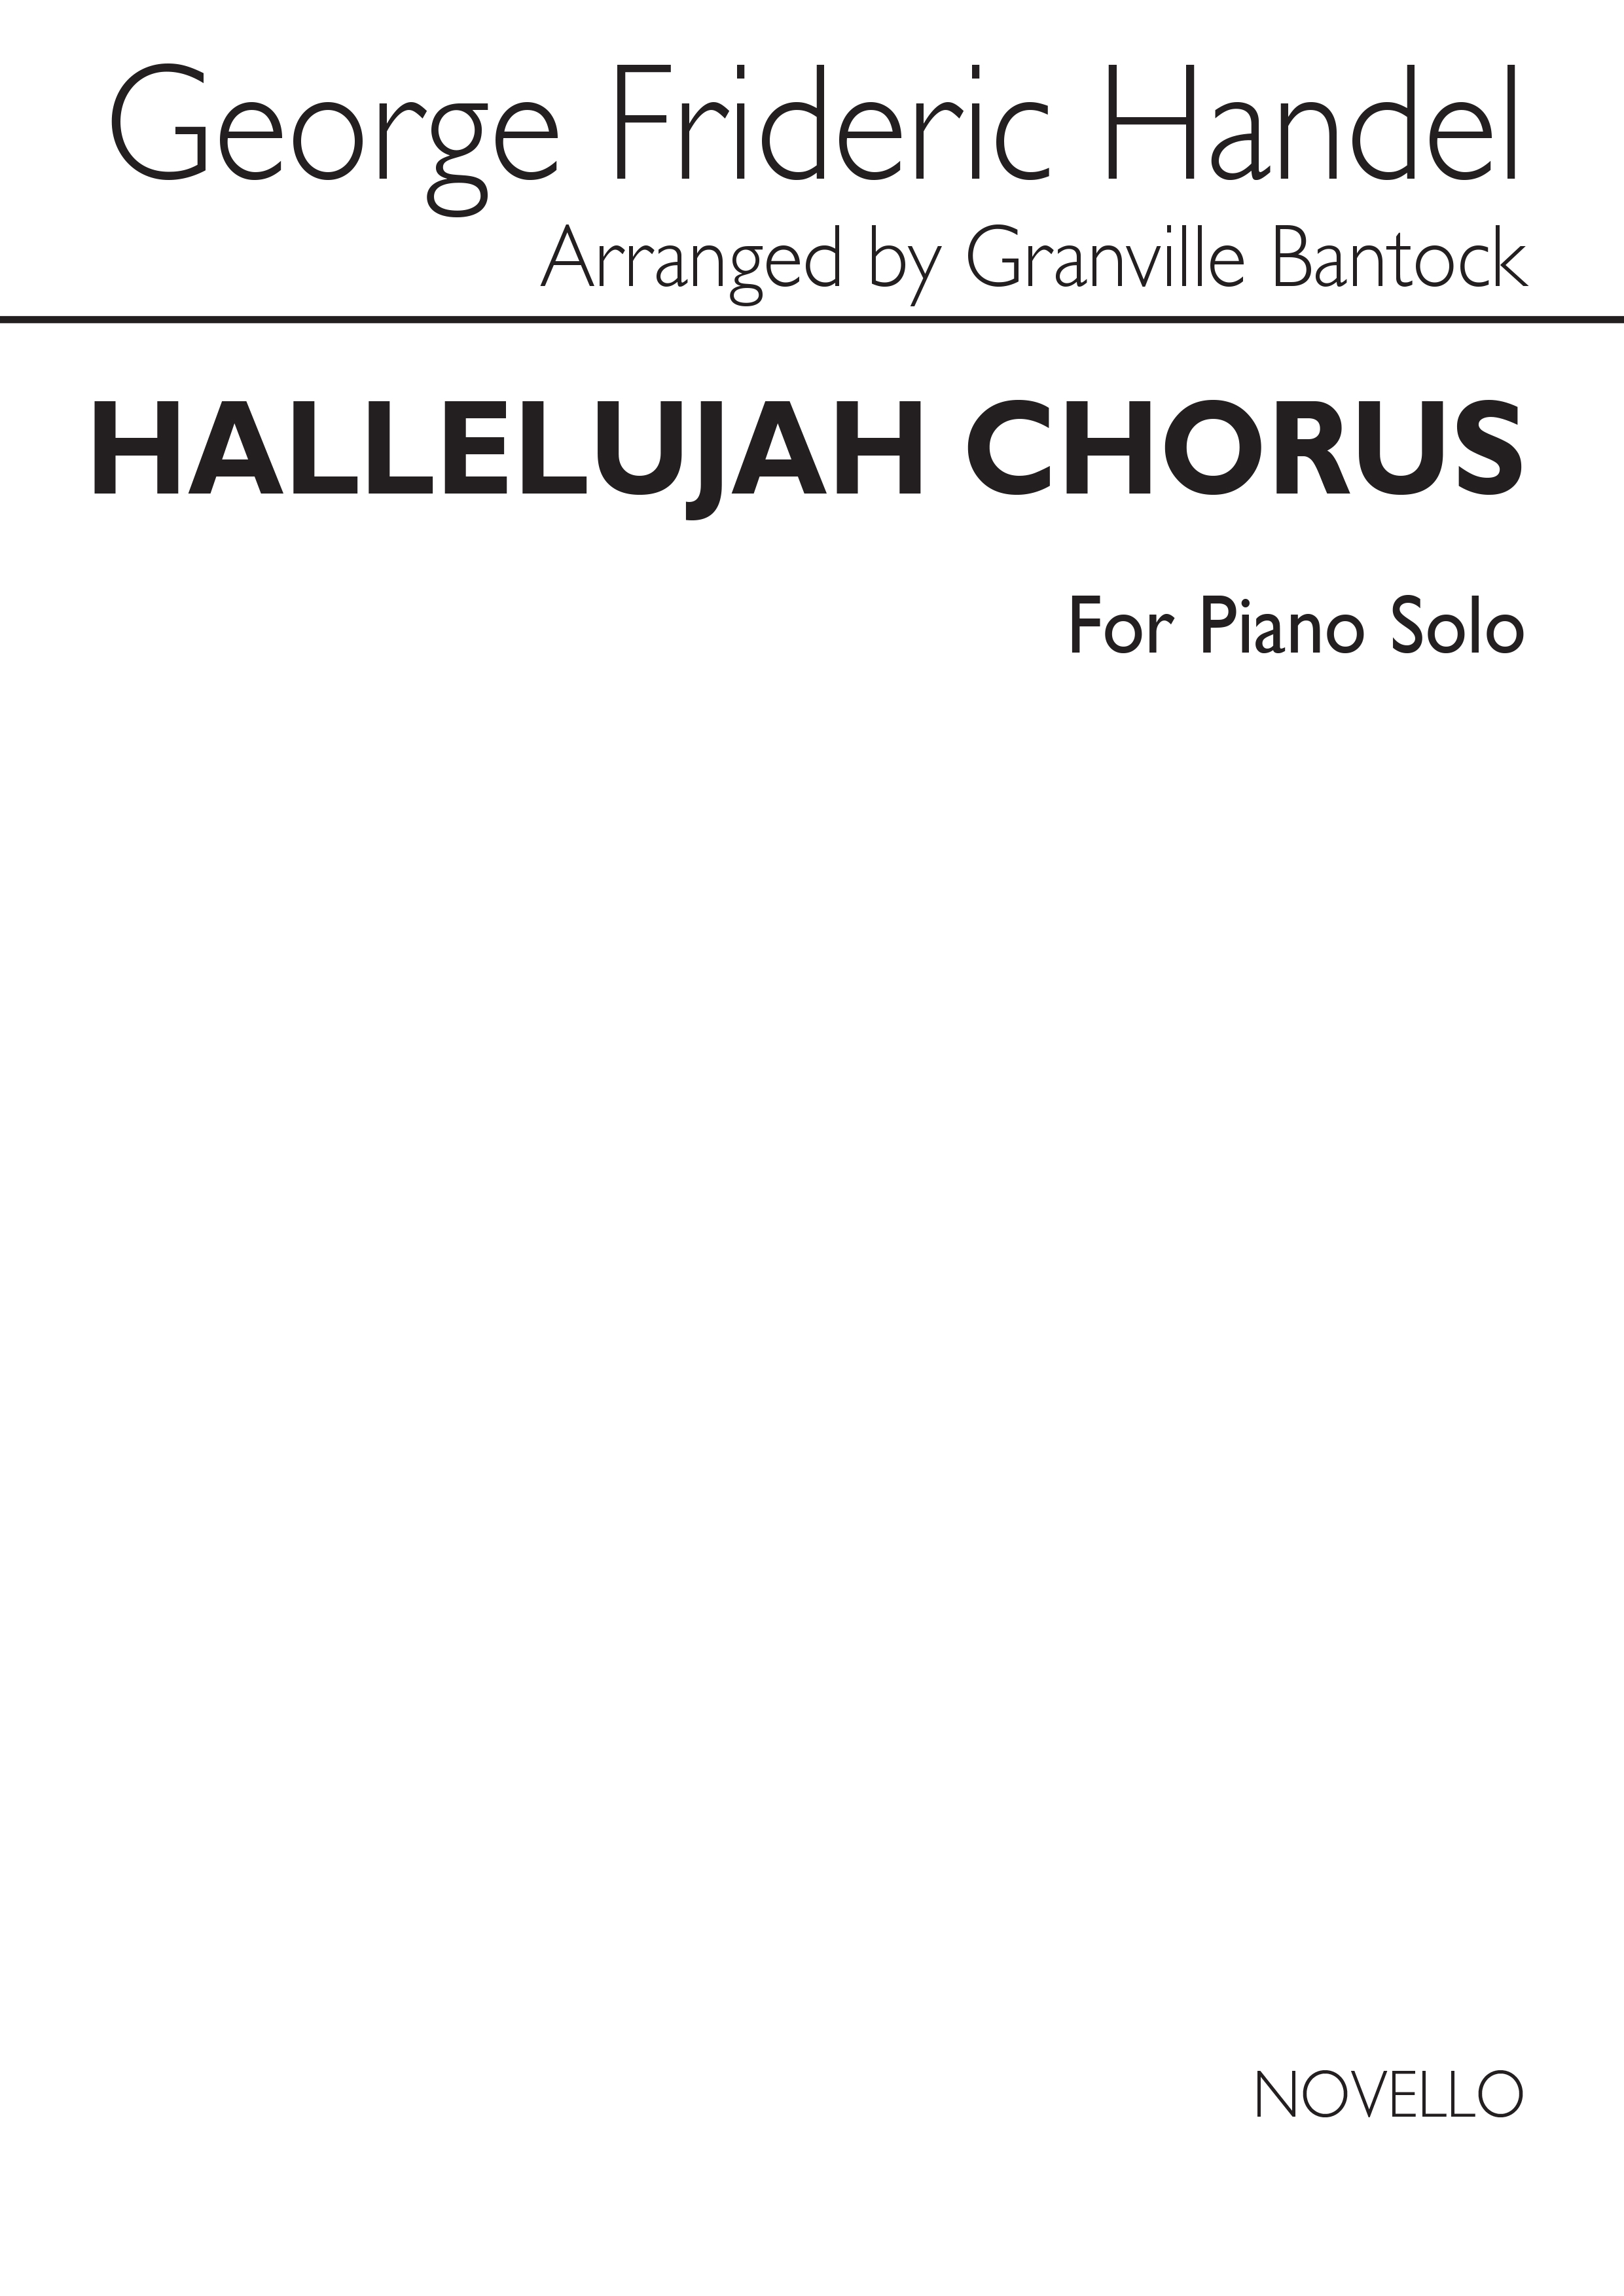 Georg Friedrich Hndel: Hallelujah Chorus (Arr. Bantock) - Solo Piano: Piano: